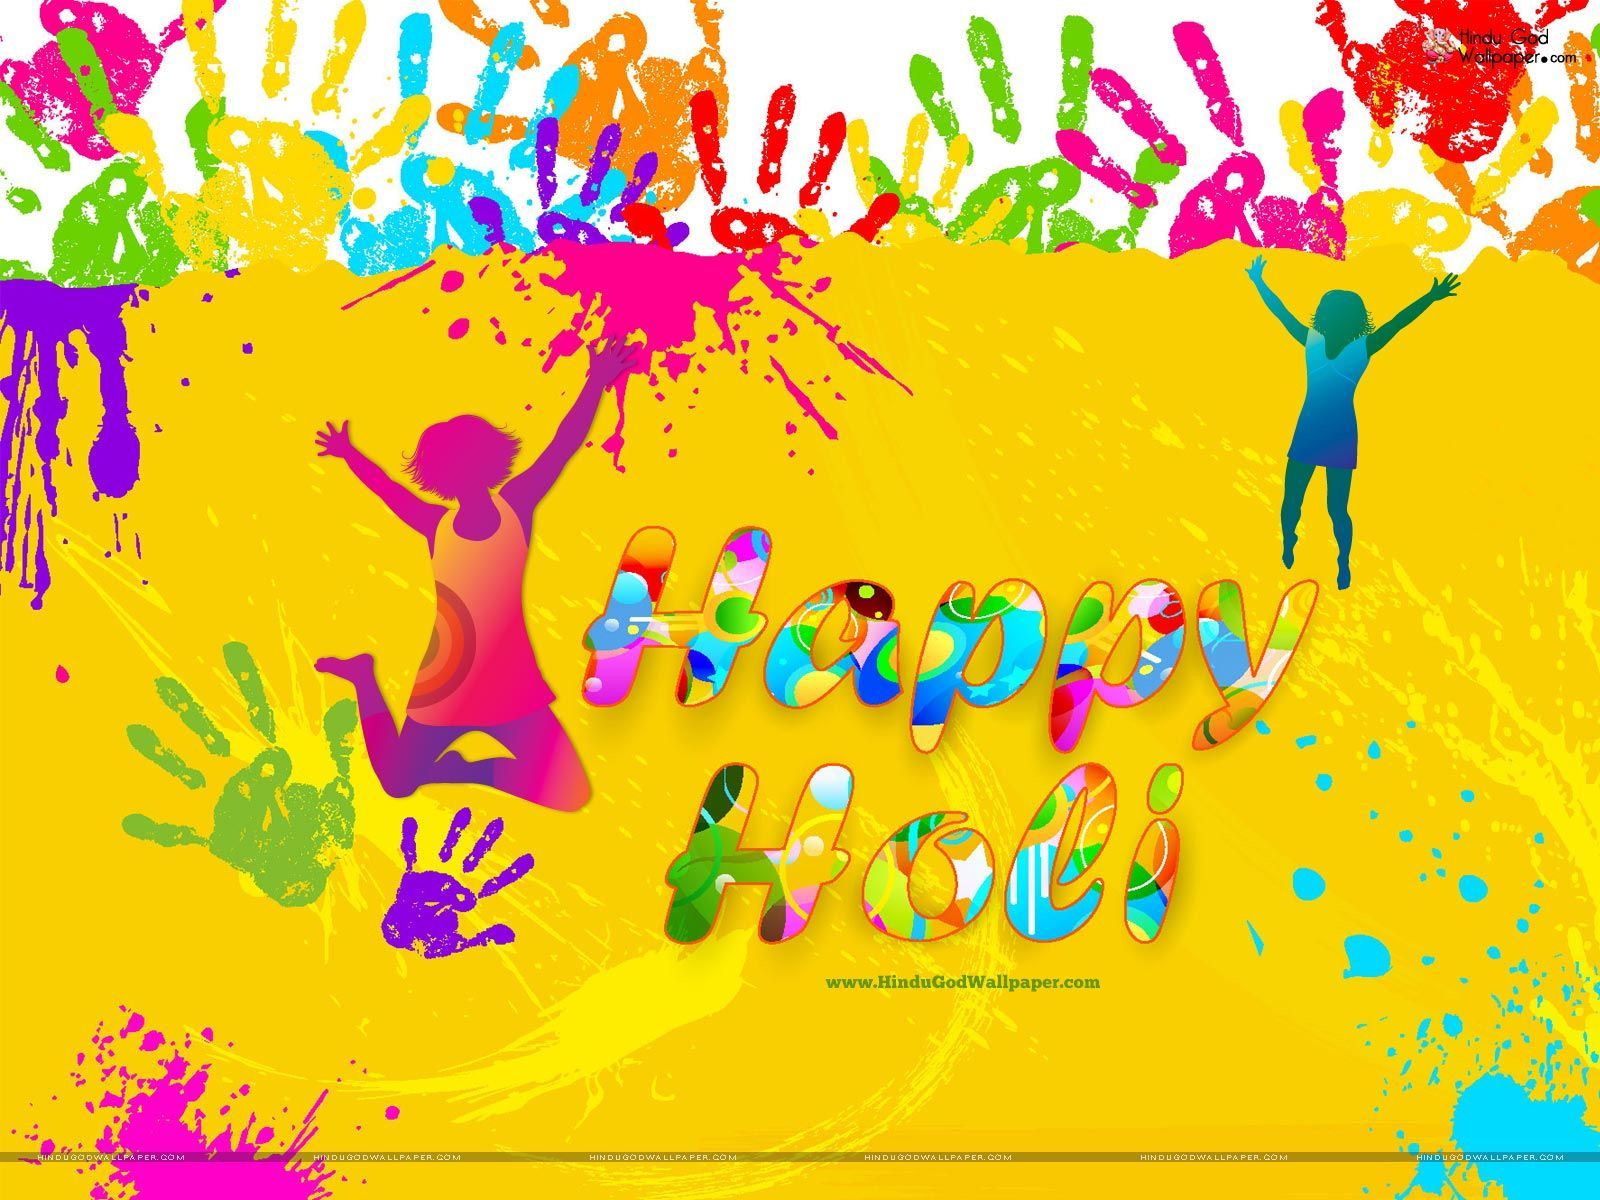 Indian Festival Holi Wallpaper Free Download. Holi image, Happy holi image, Happy holi wallpaper